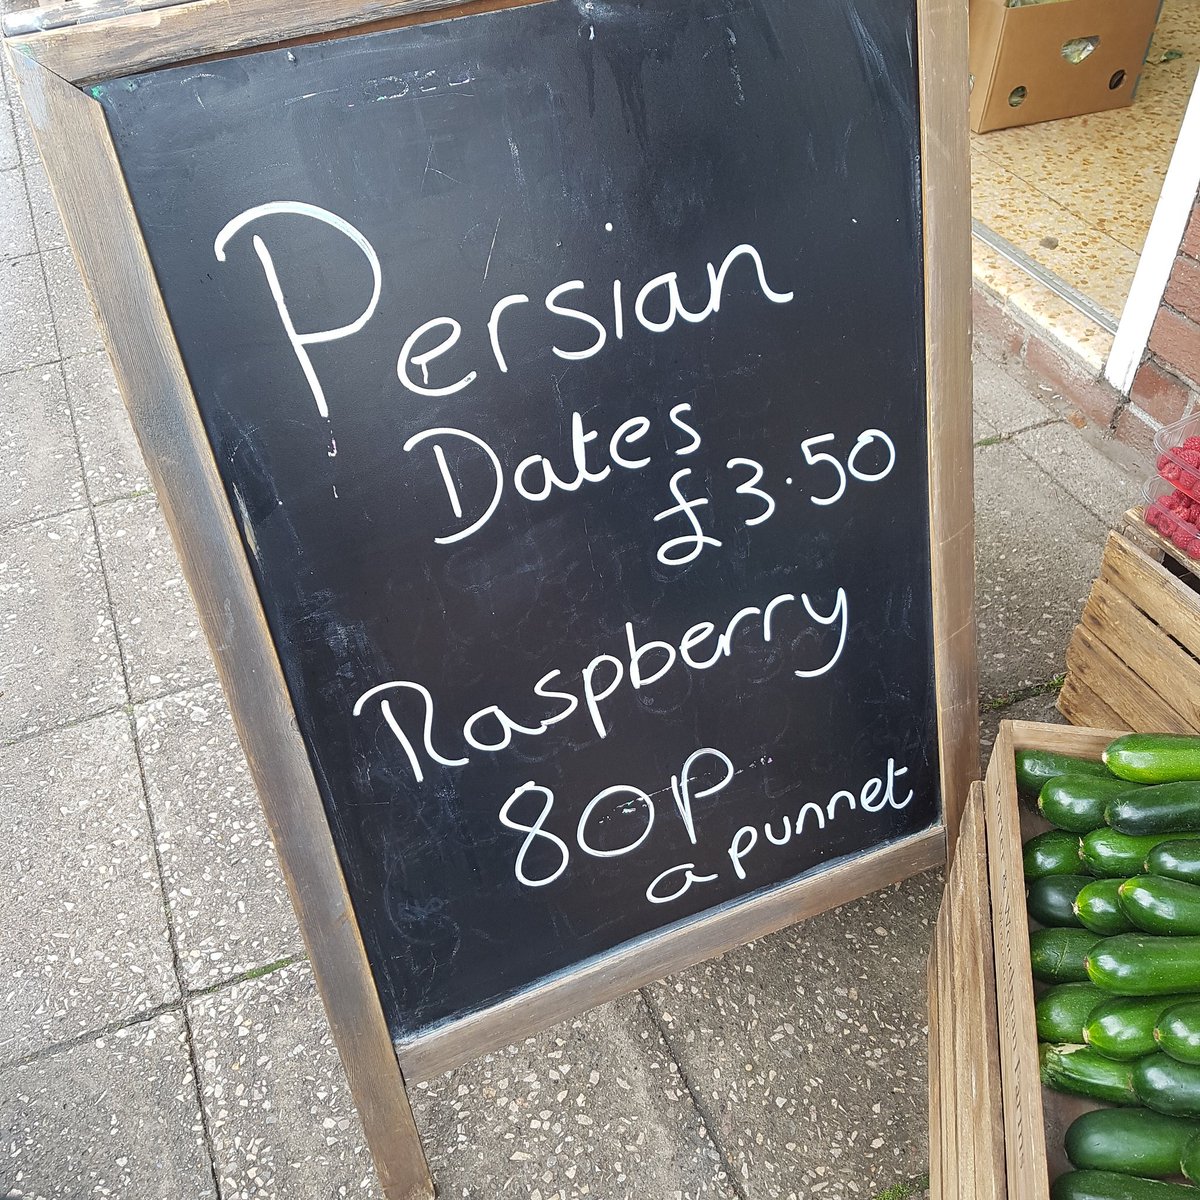 Todays specials! #persiandates #freshraspberries